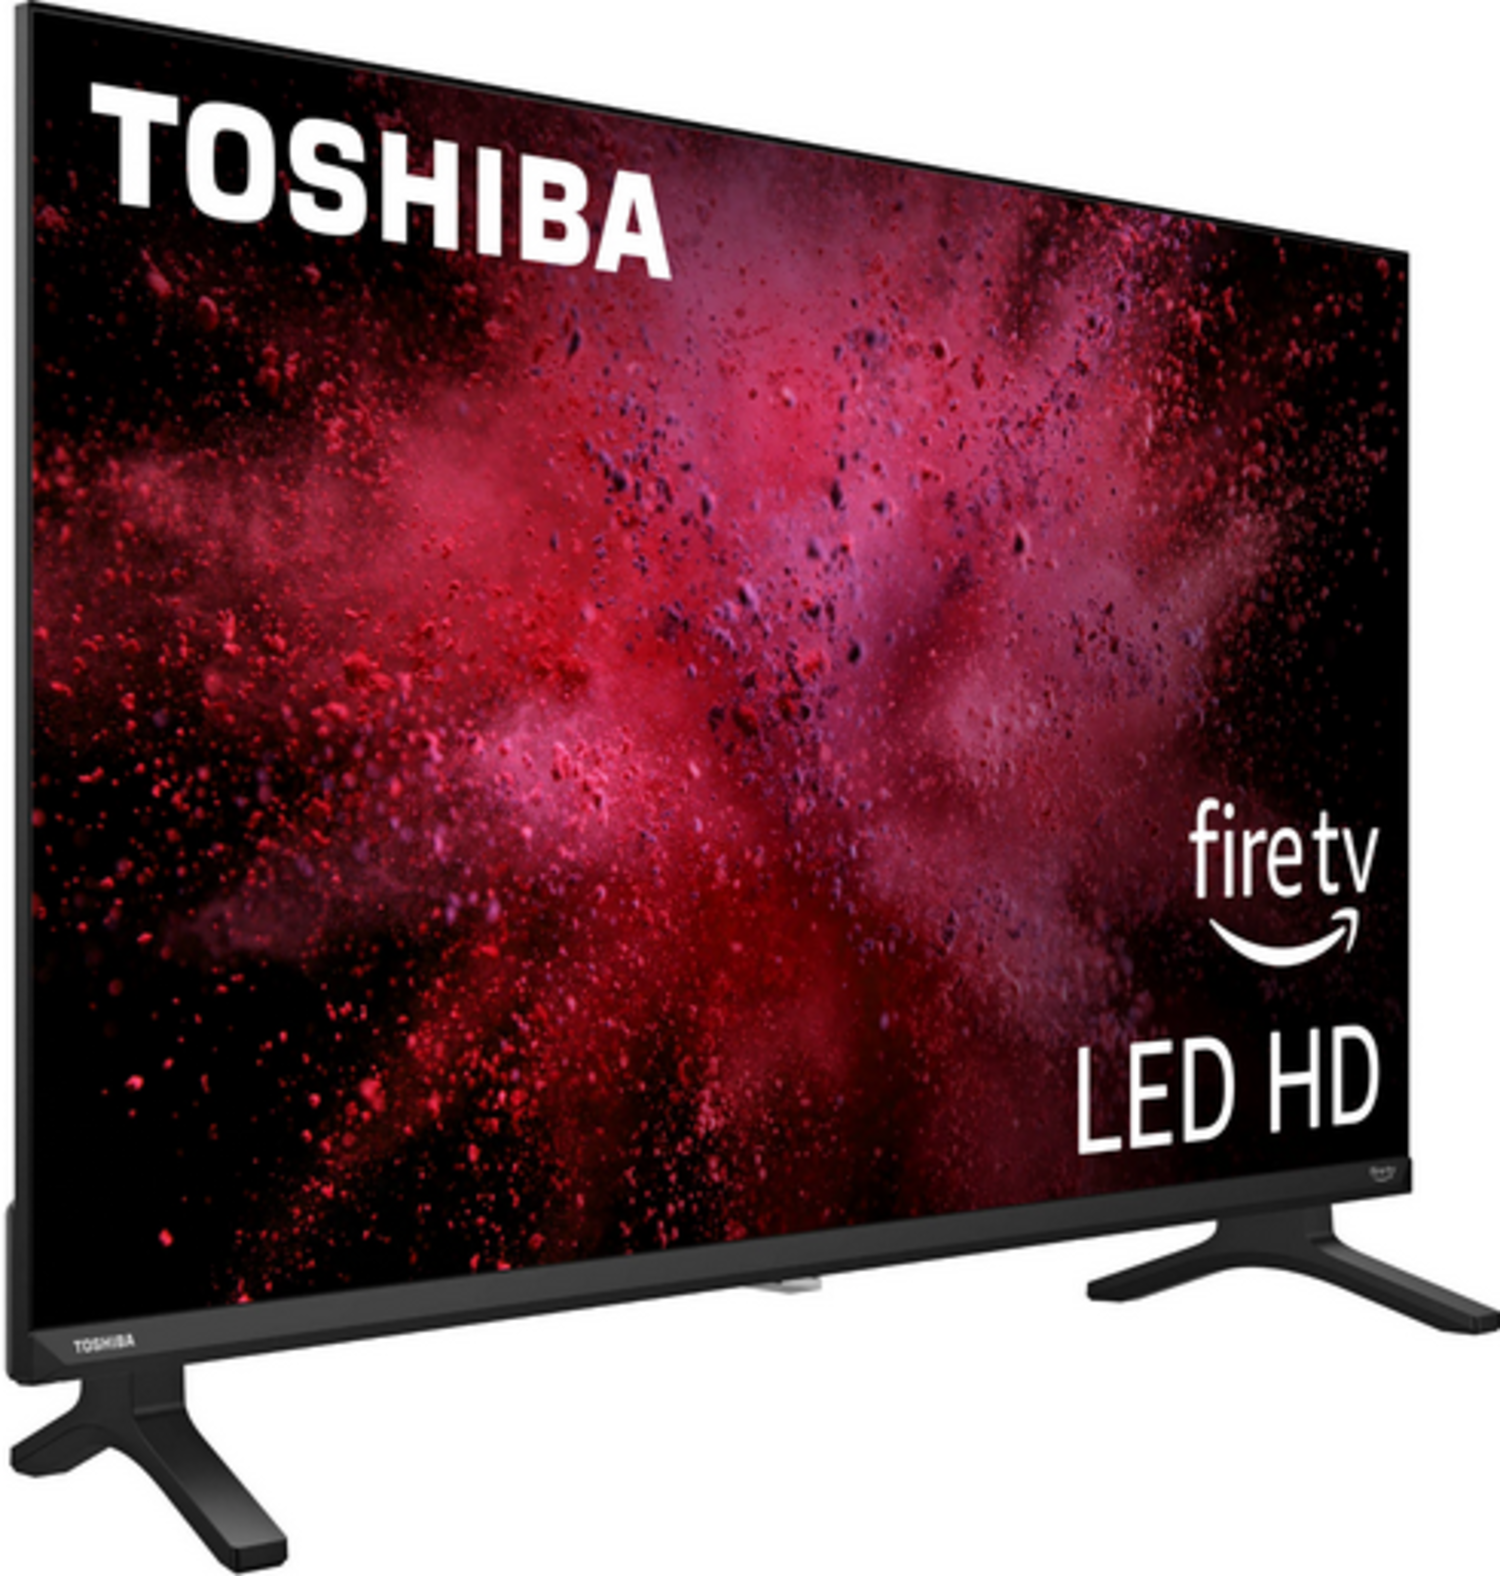 SMART FIRE TV HD TOSHIBA DE 32 PULGADAS MODELO 2020